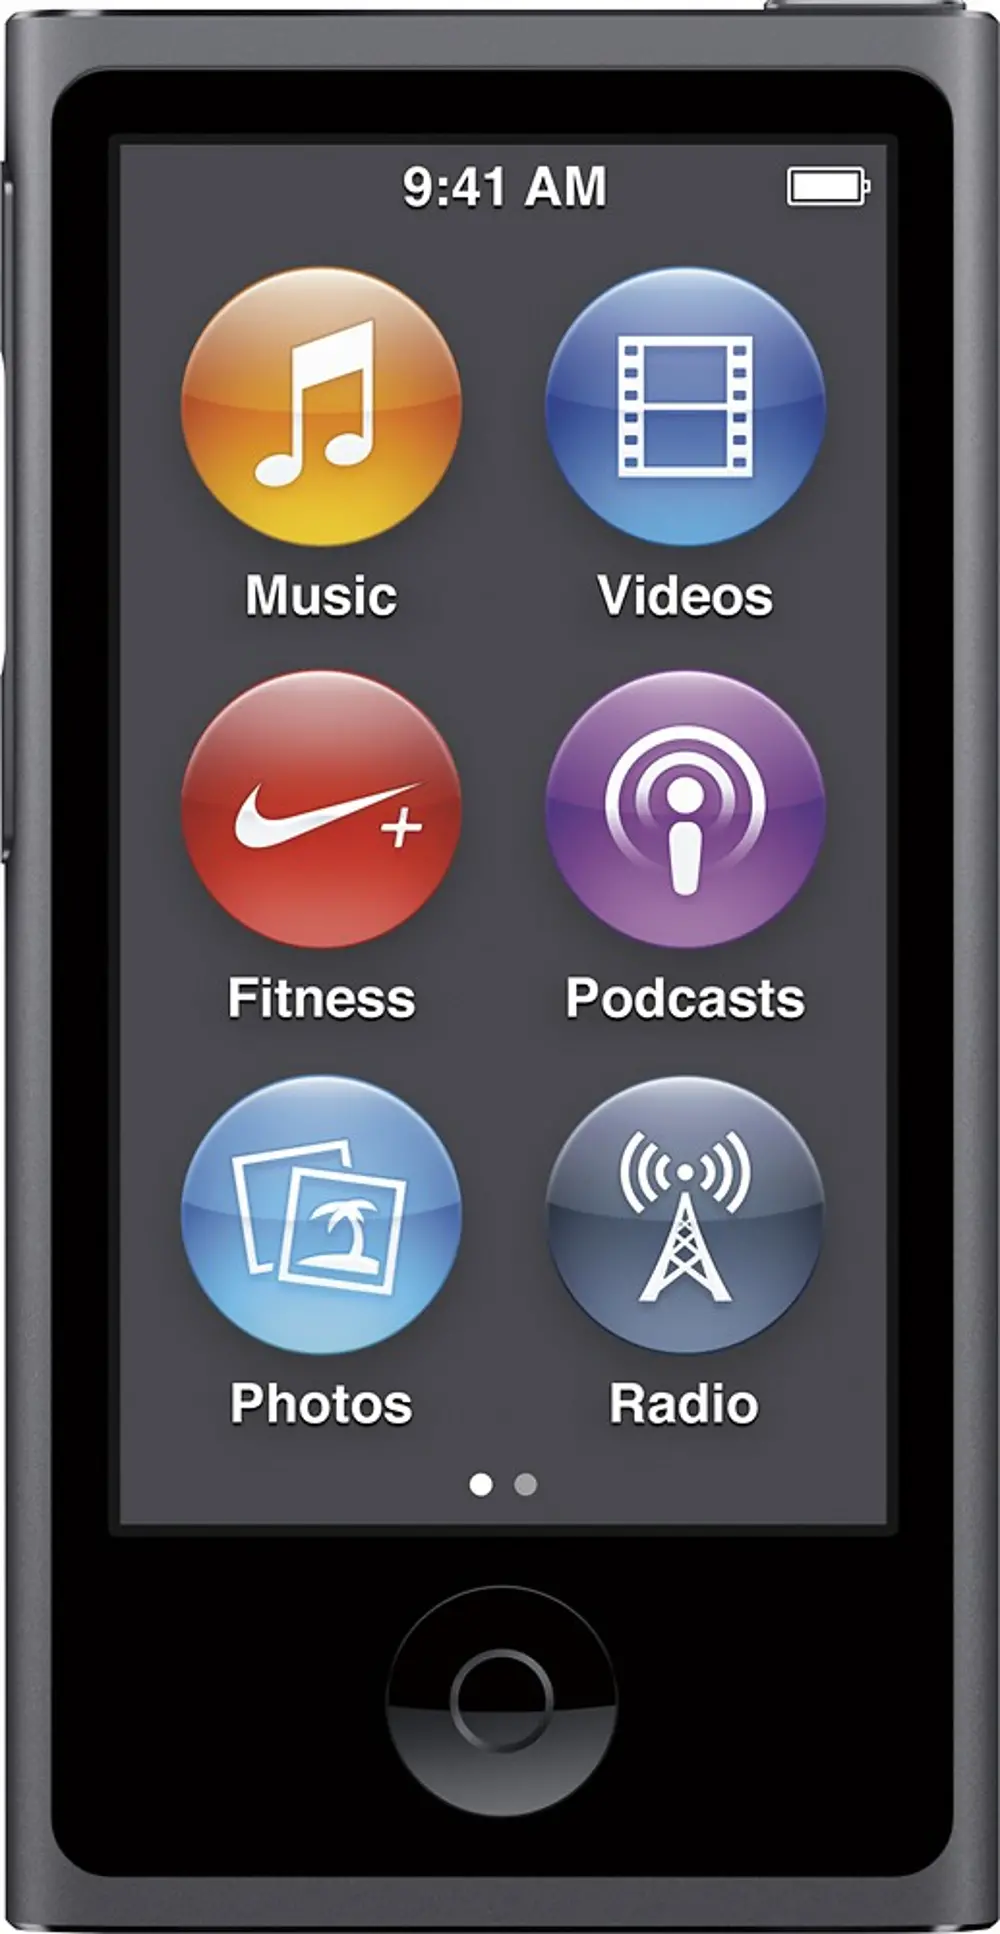 MKN52LL/A Apple iPod Nano - 16GB Gray (8th Generation)-1